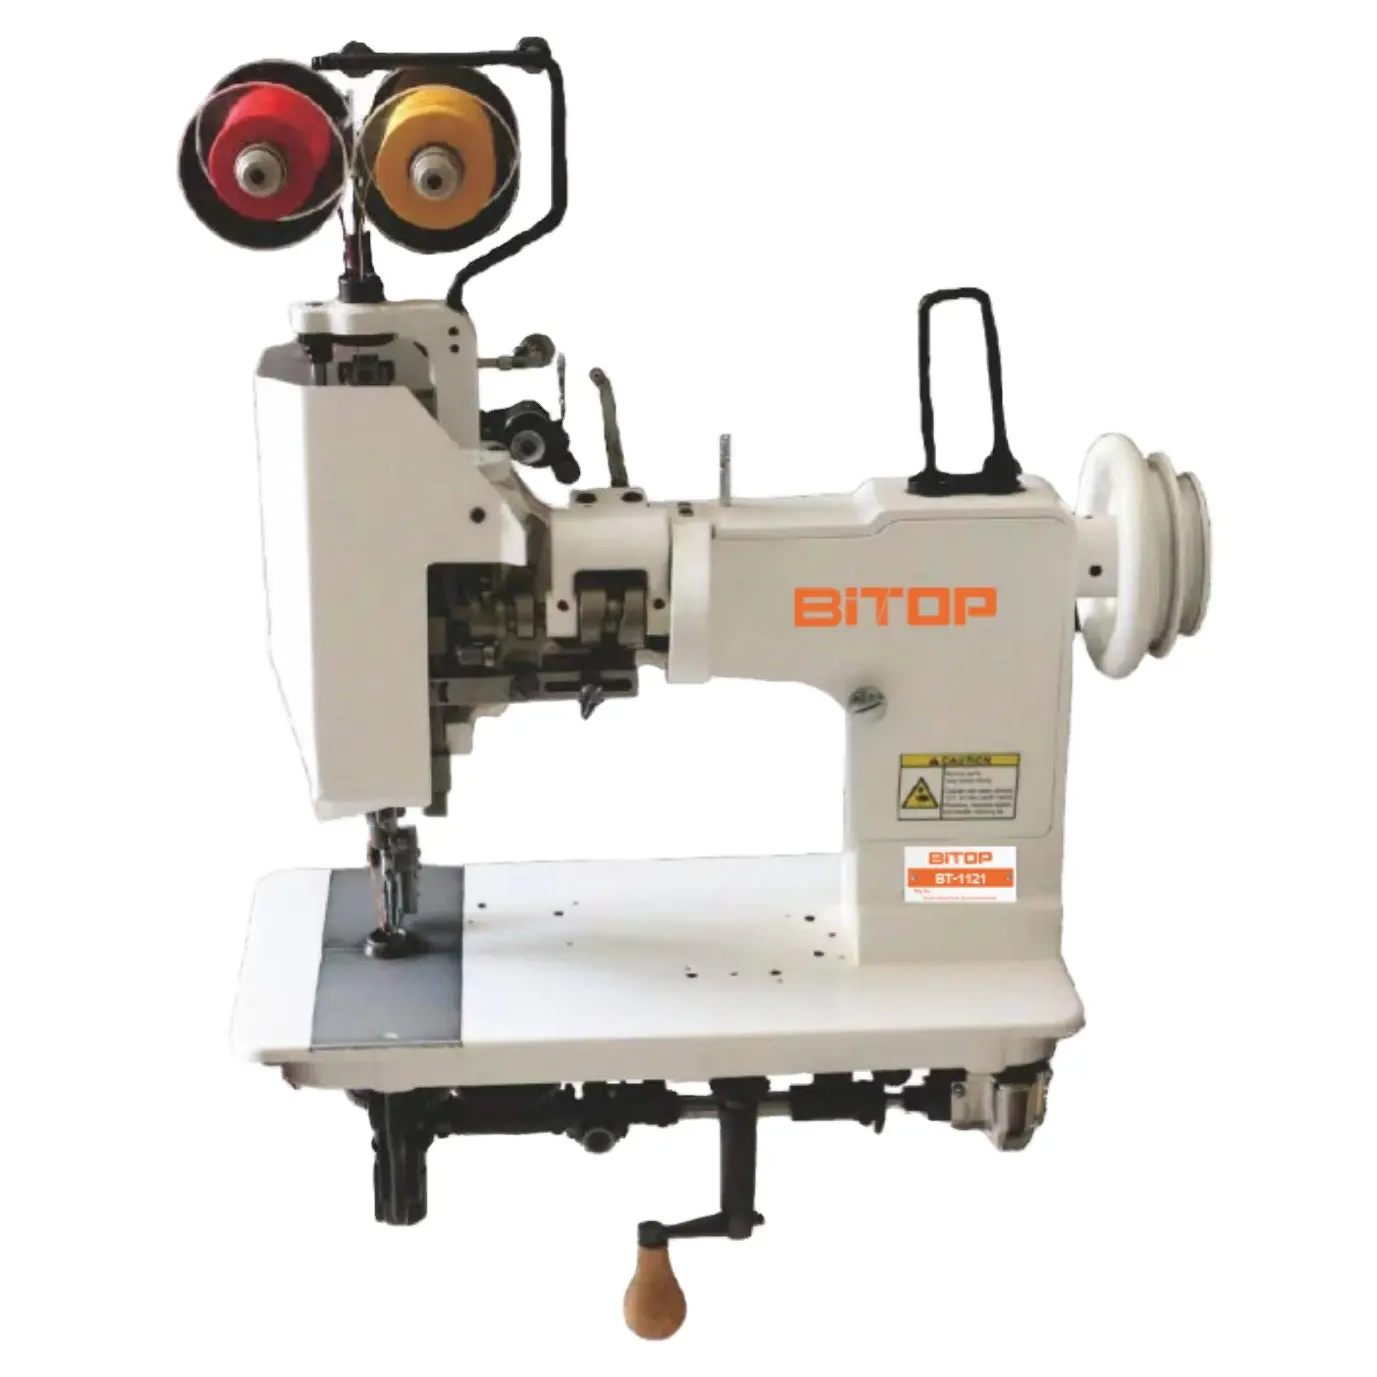 BT-1121 Operated single head Lock Stitch zigzag Handle embroidery machine